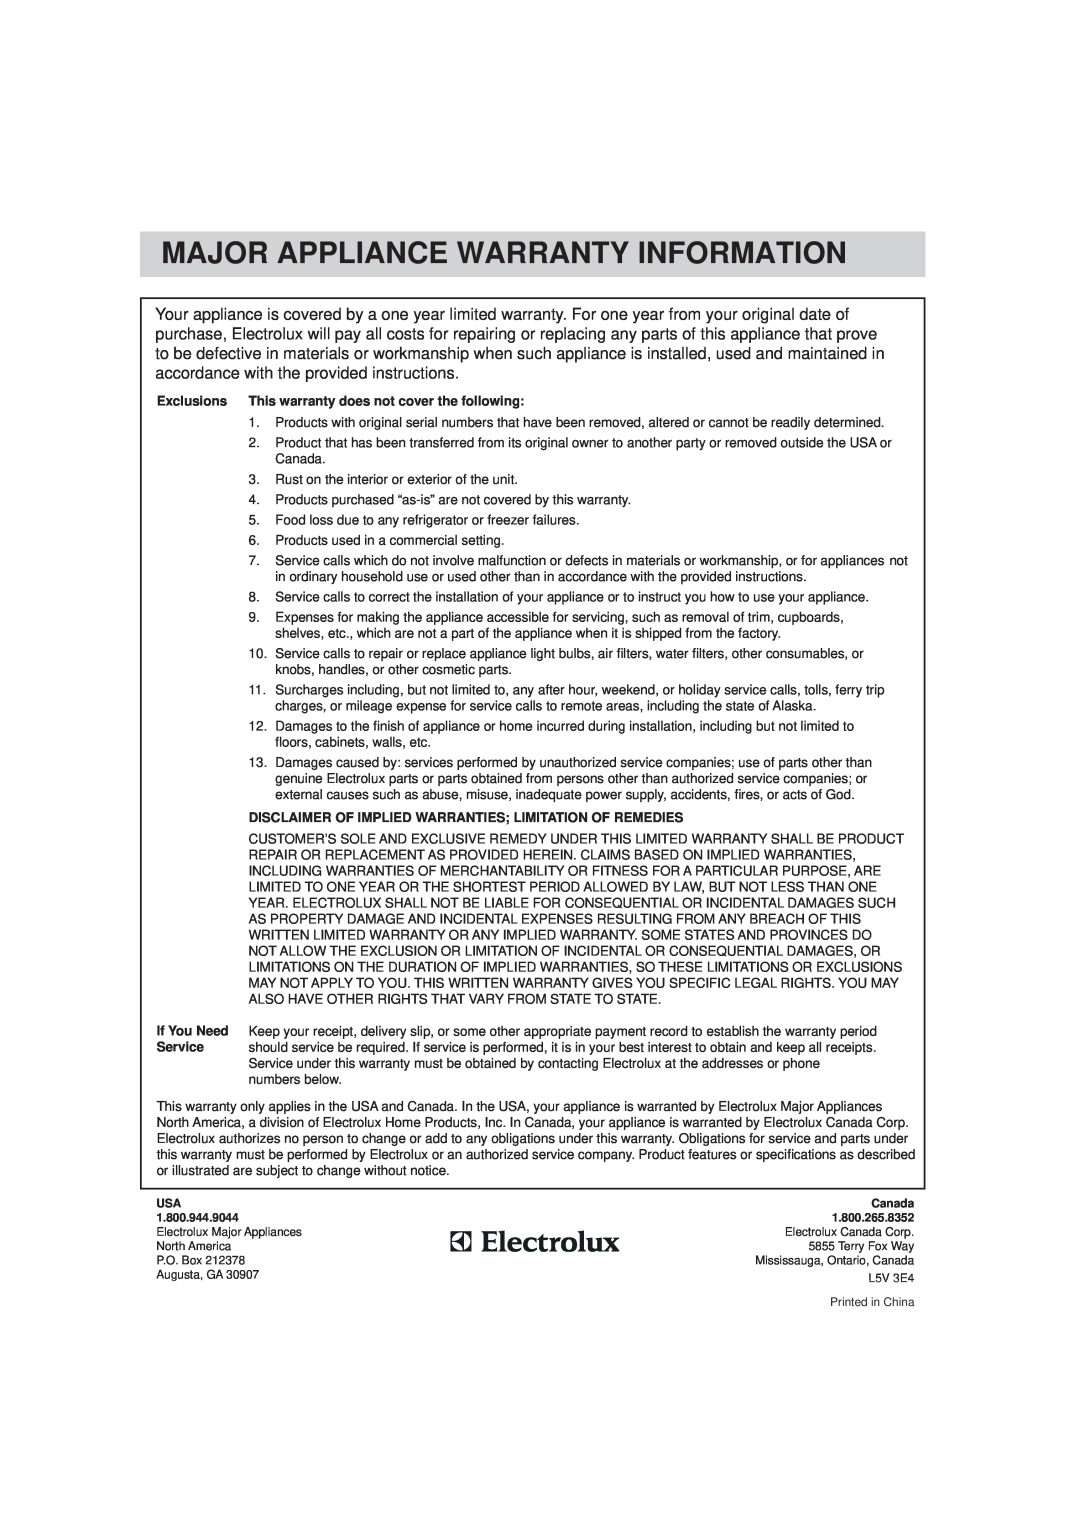 Frigidaire FFMV152CLB, FFMV154CLS, FFMV152CLW important safety instructions Major Appliance Warranty Information 